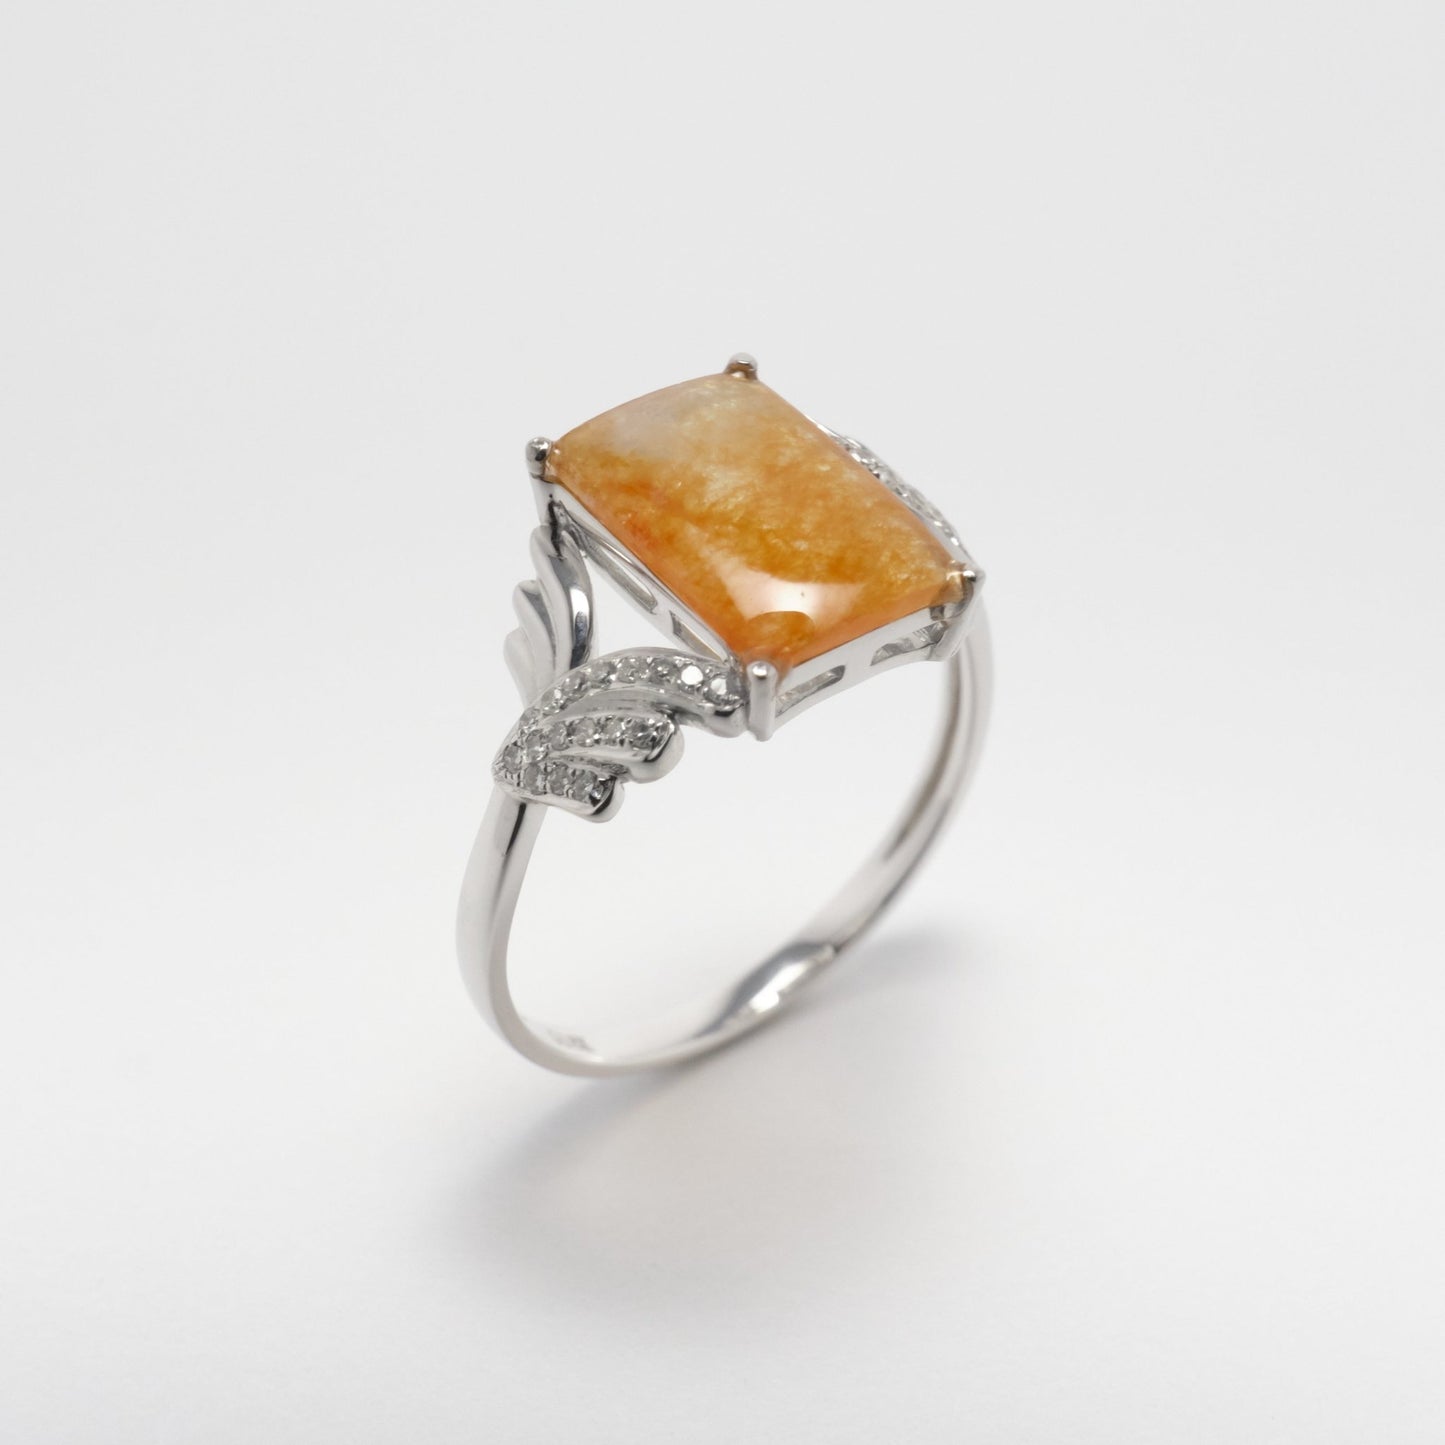 Ring - 18K白金緬甸黃翡方面天然翡翠配交錯鑽石葉形戒指 - 雅玉珠寶